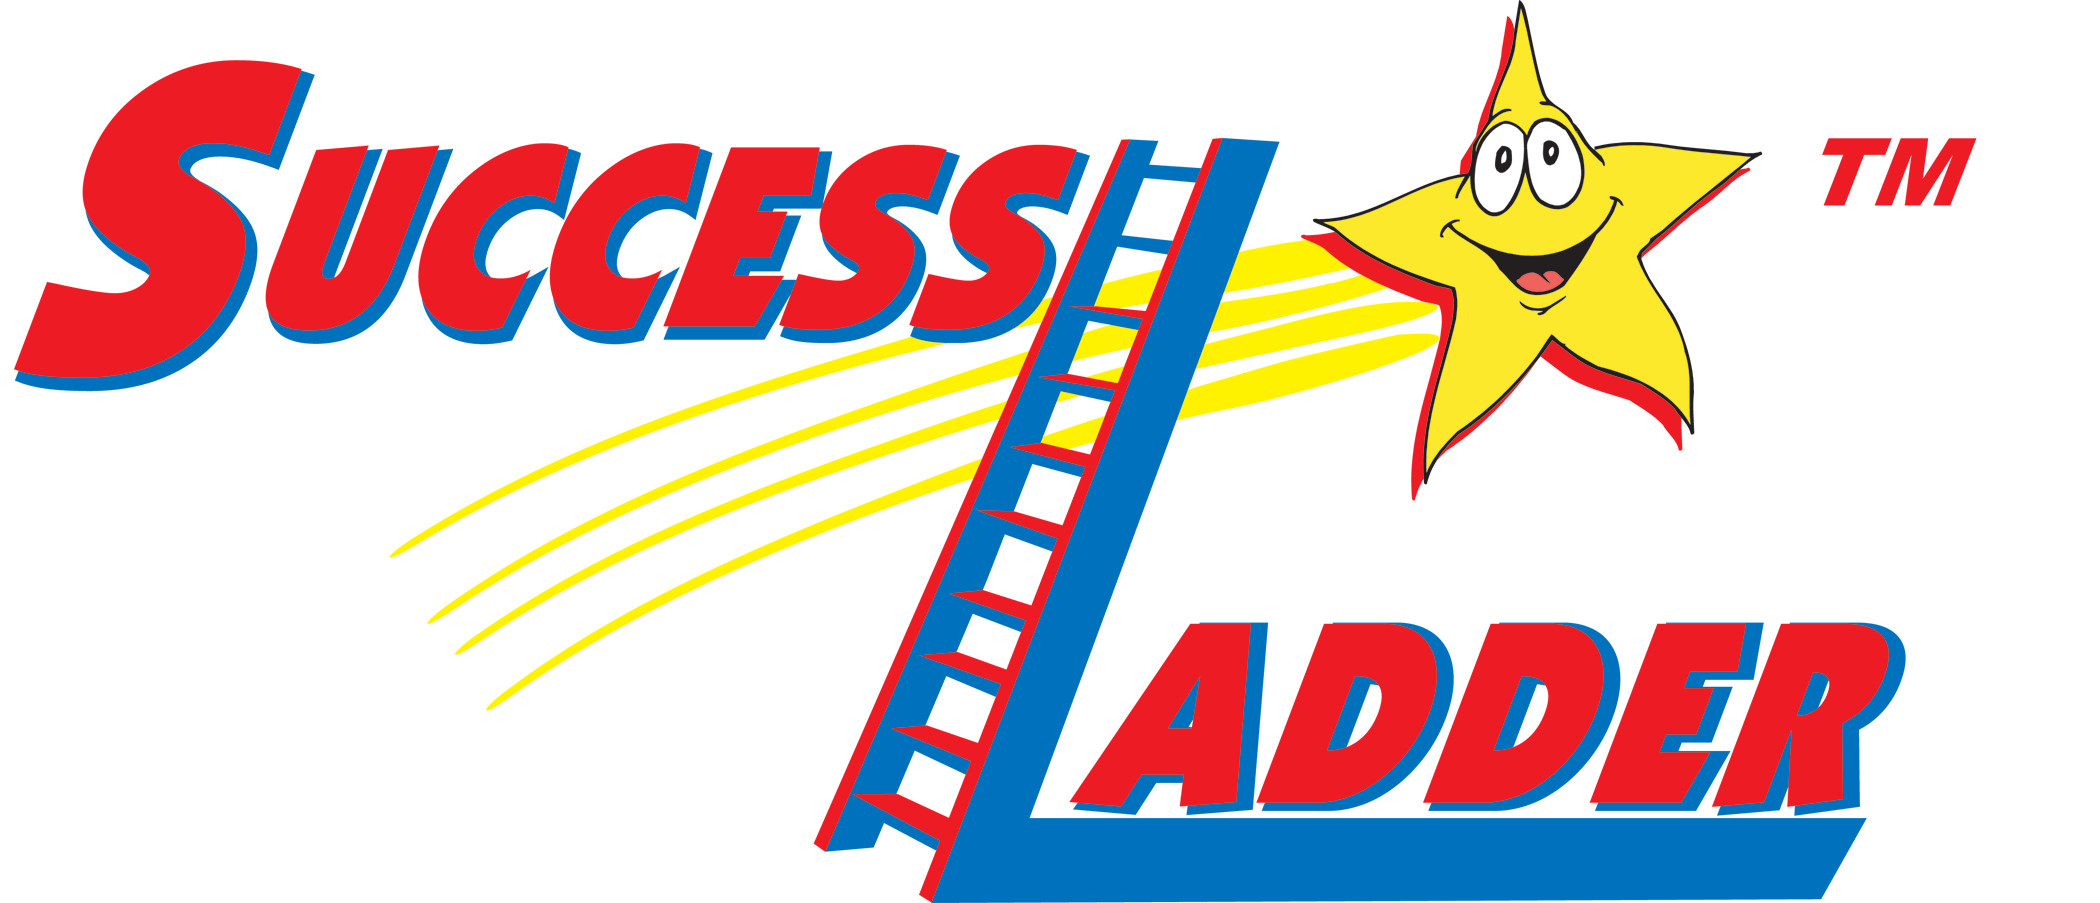 Ladder Of Success Image HQ Image Free PNG PNG Image